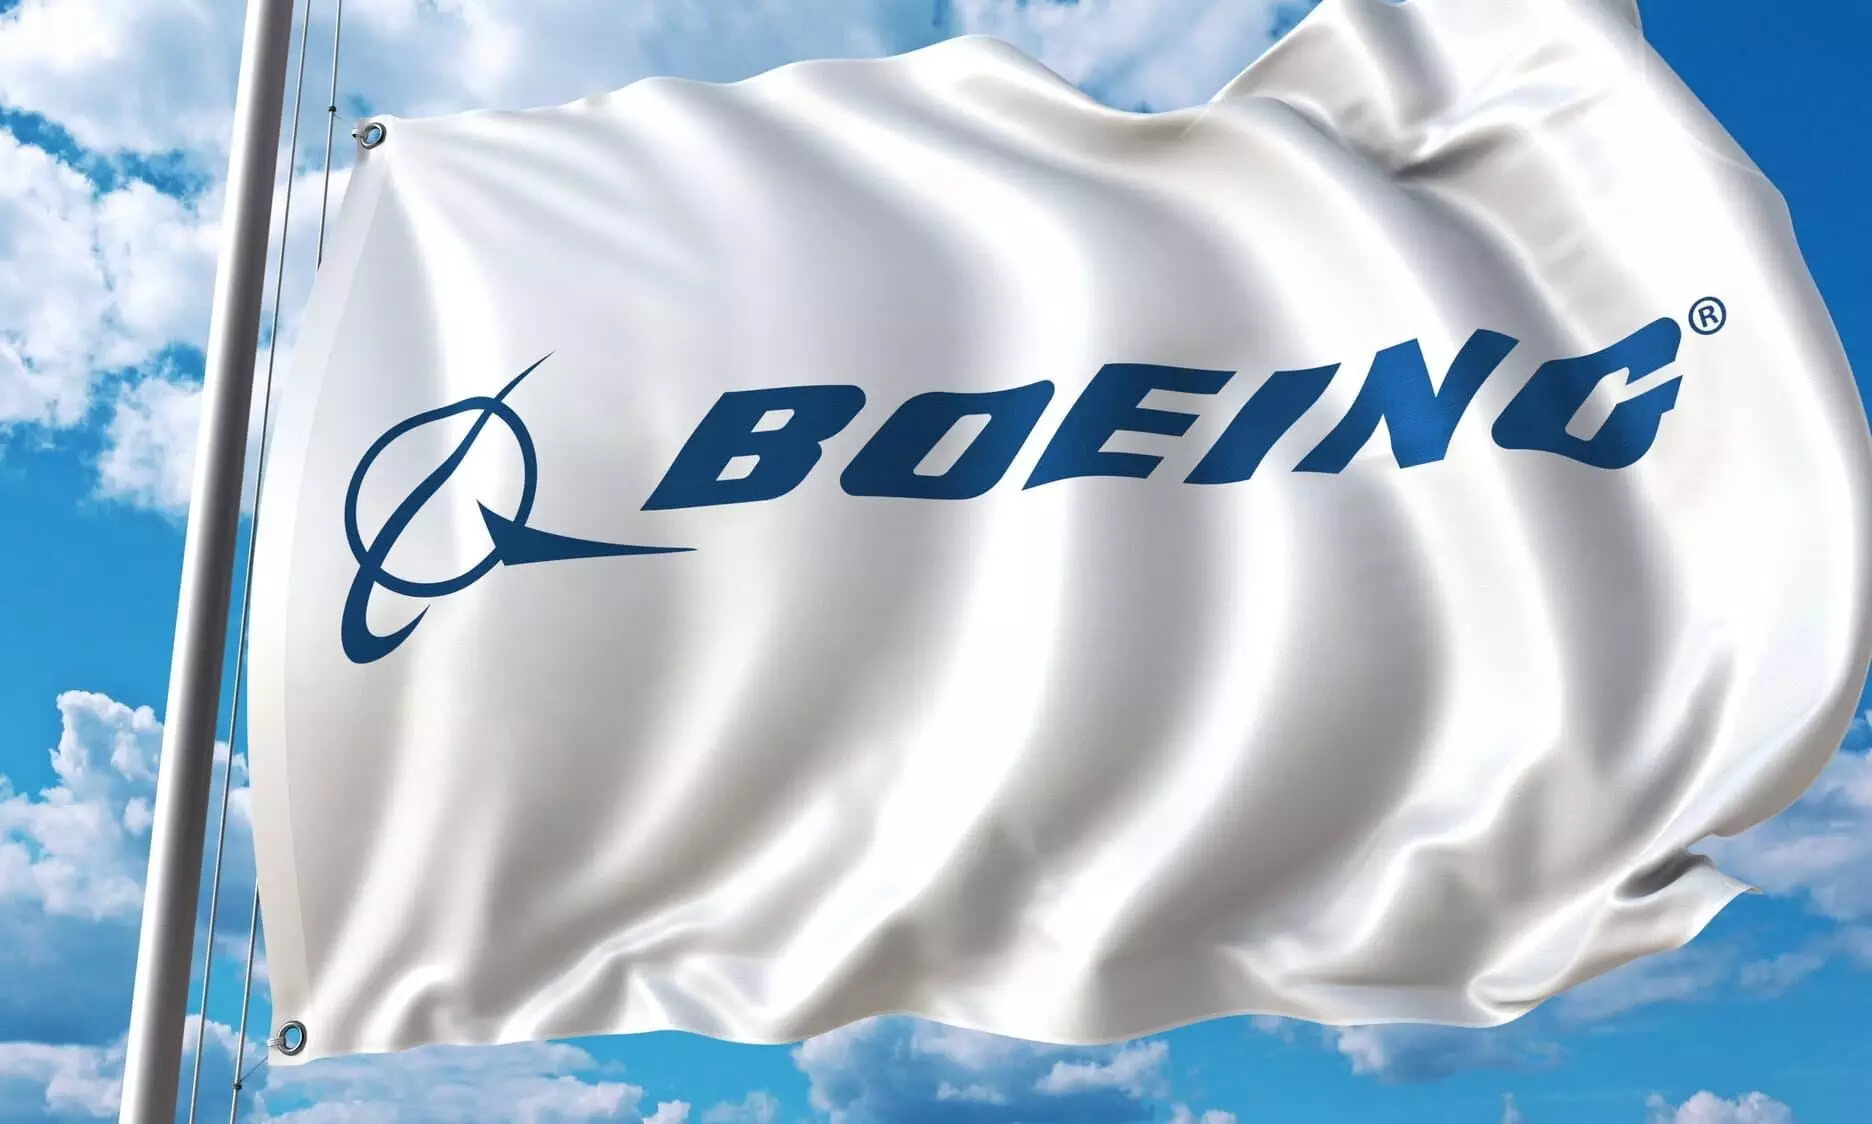 Boeing Q2 revenue up 18% on higher deliveries